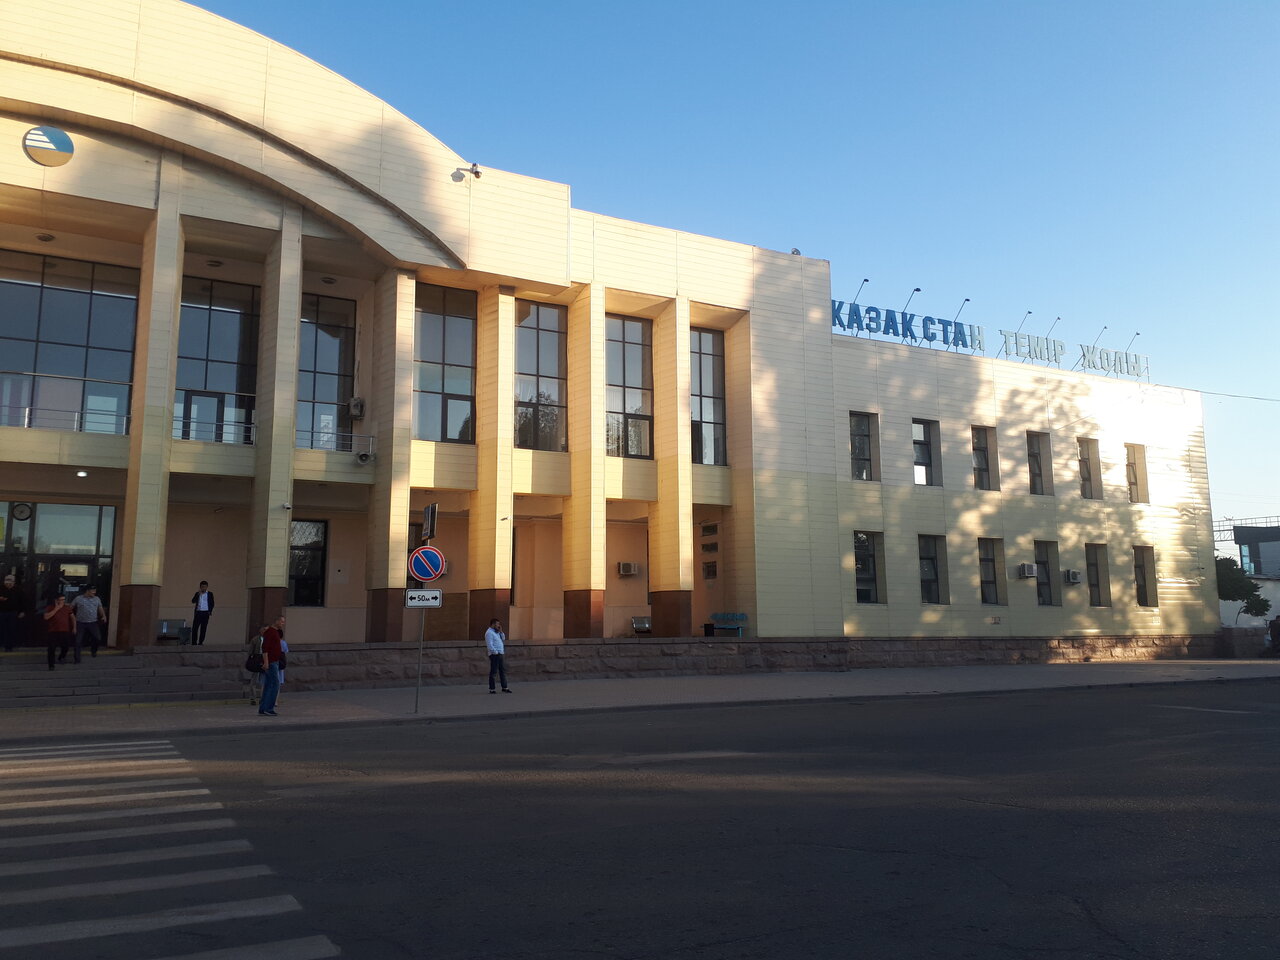 Вокзалы казахстана